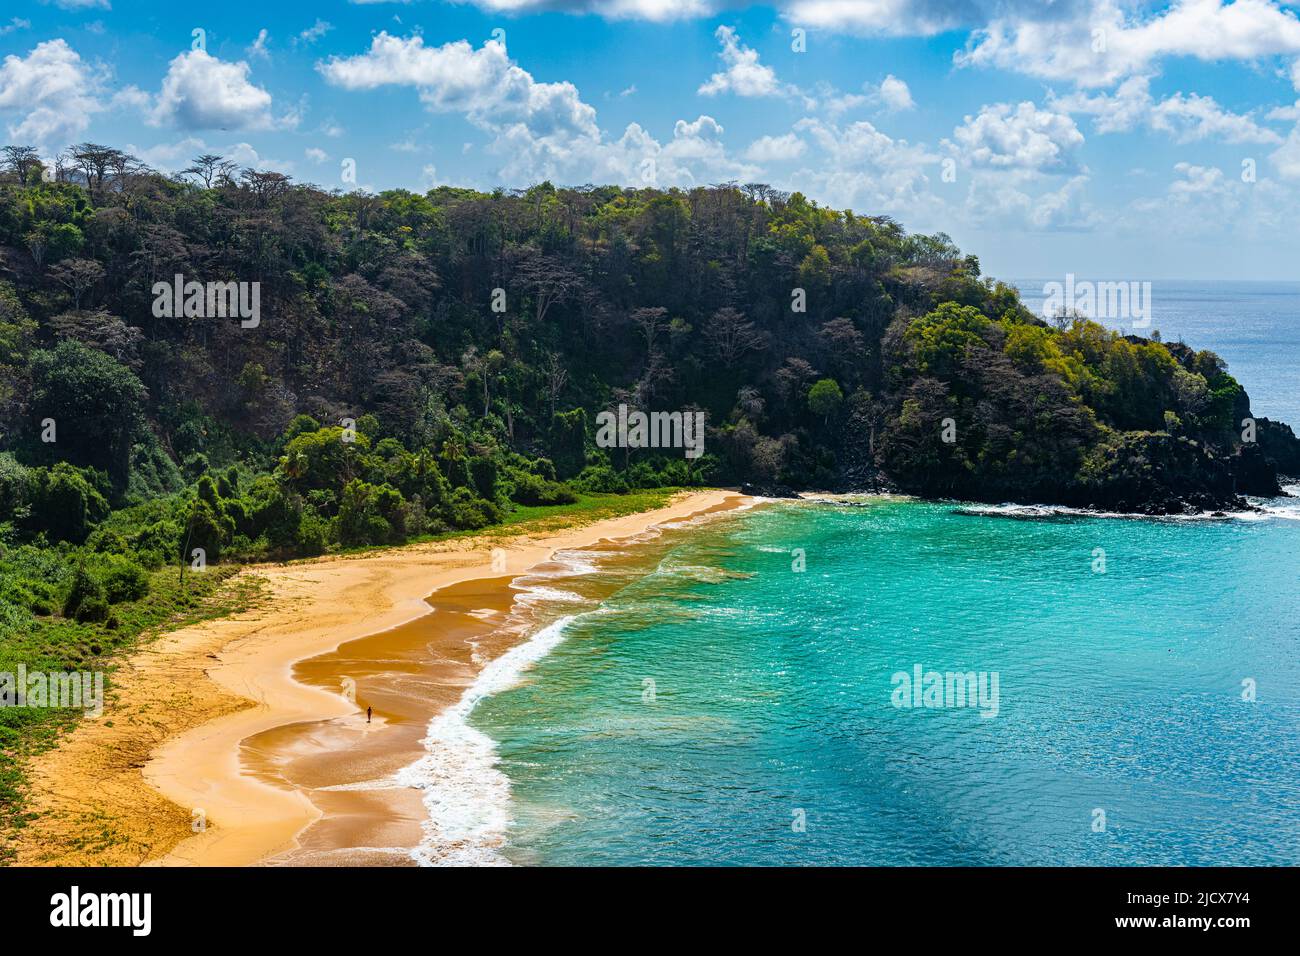 World famous Sancho Beach, Fernando de Noronha, UNESCO World Heritage Site, Brazil, South America Stock Photo